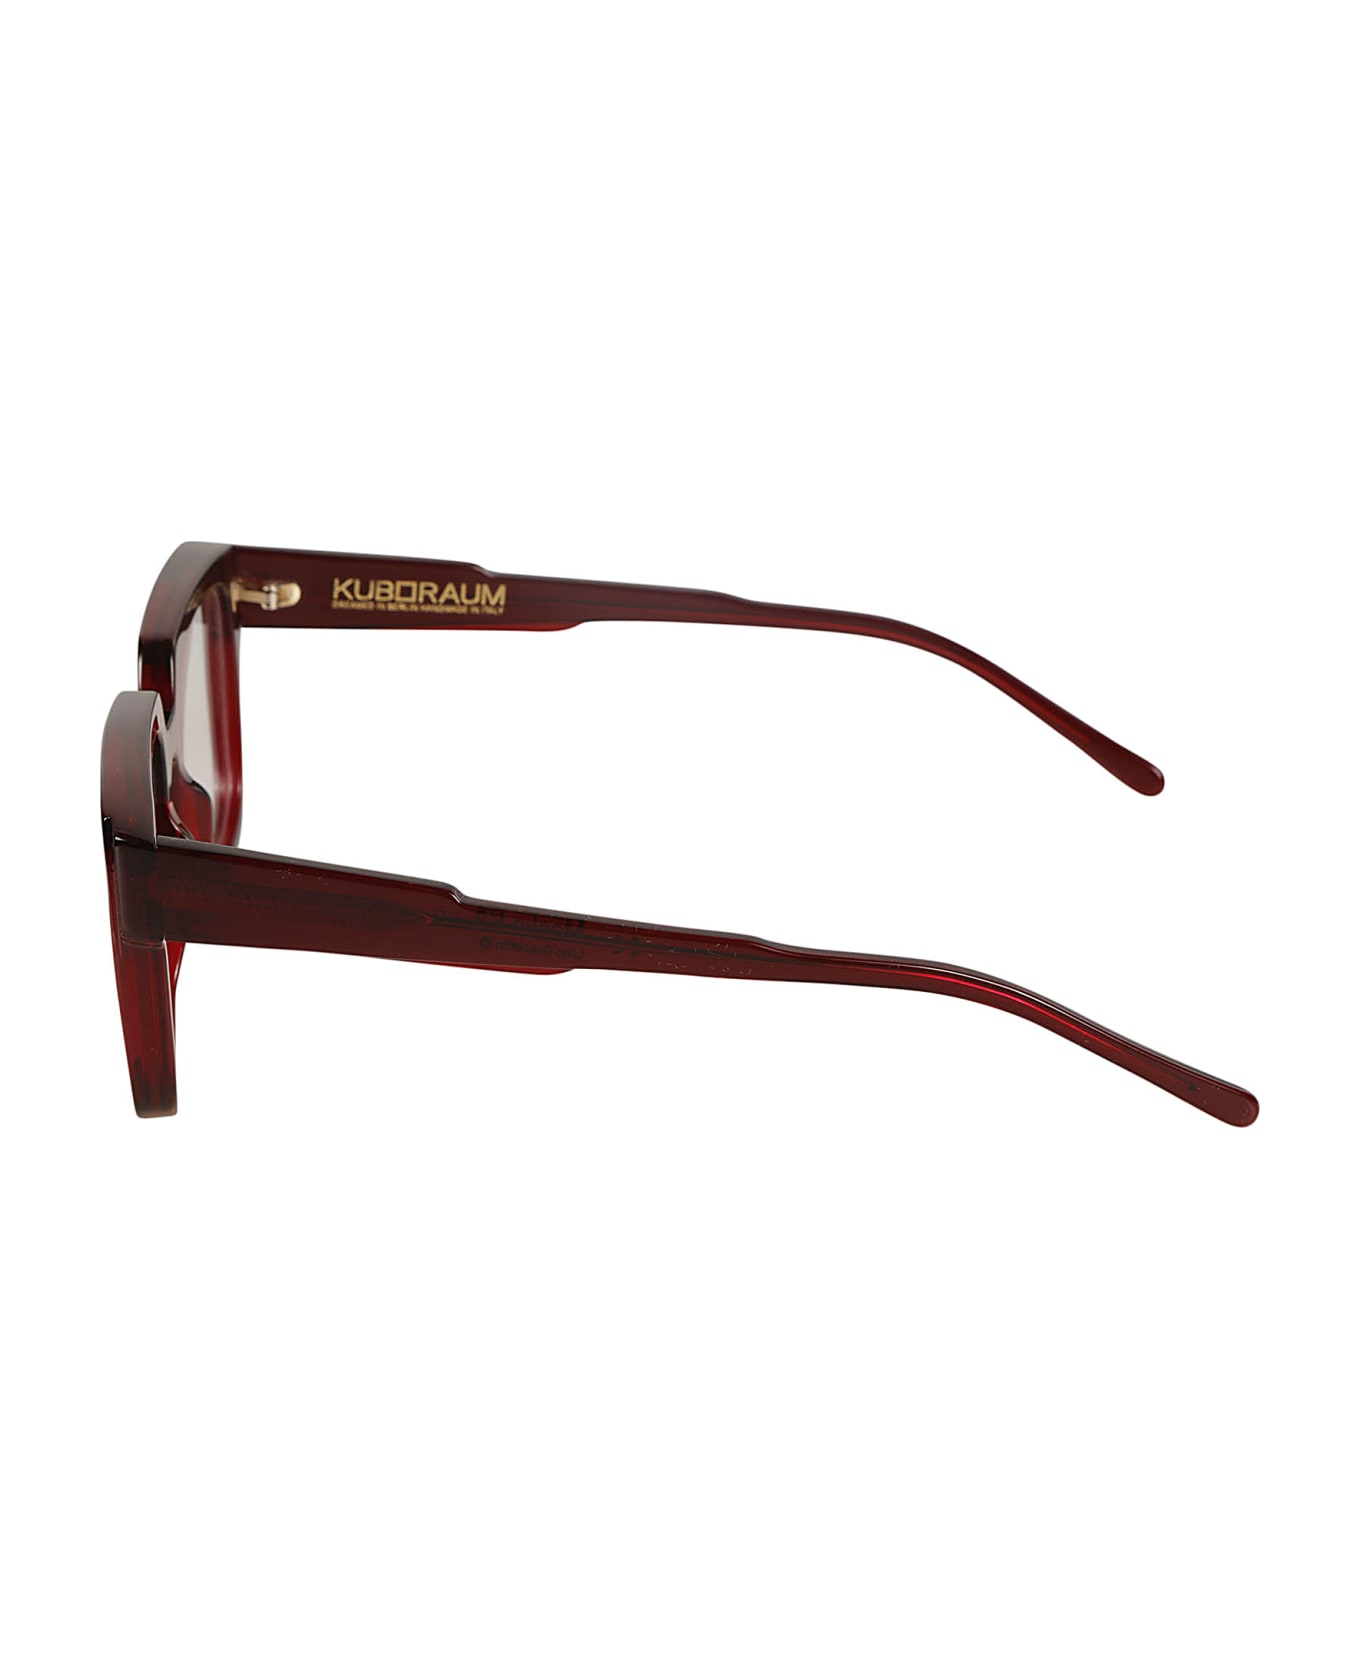 Kuboraum K3 Glasses Glasses - bordeaux アイウェア